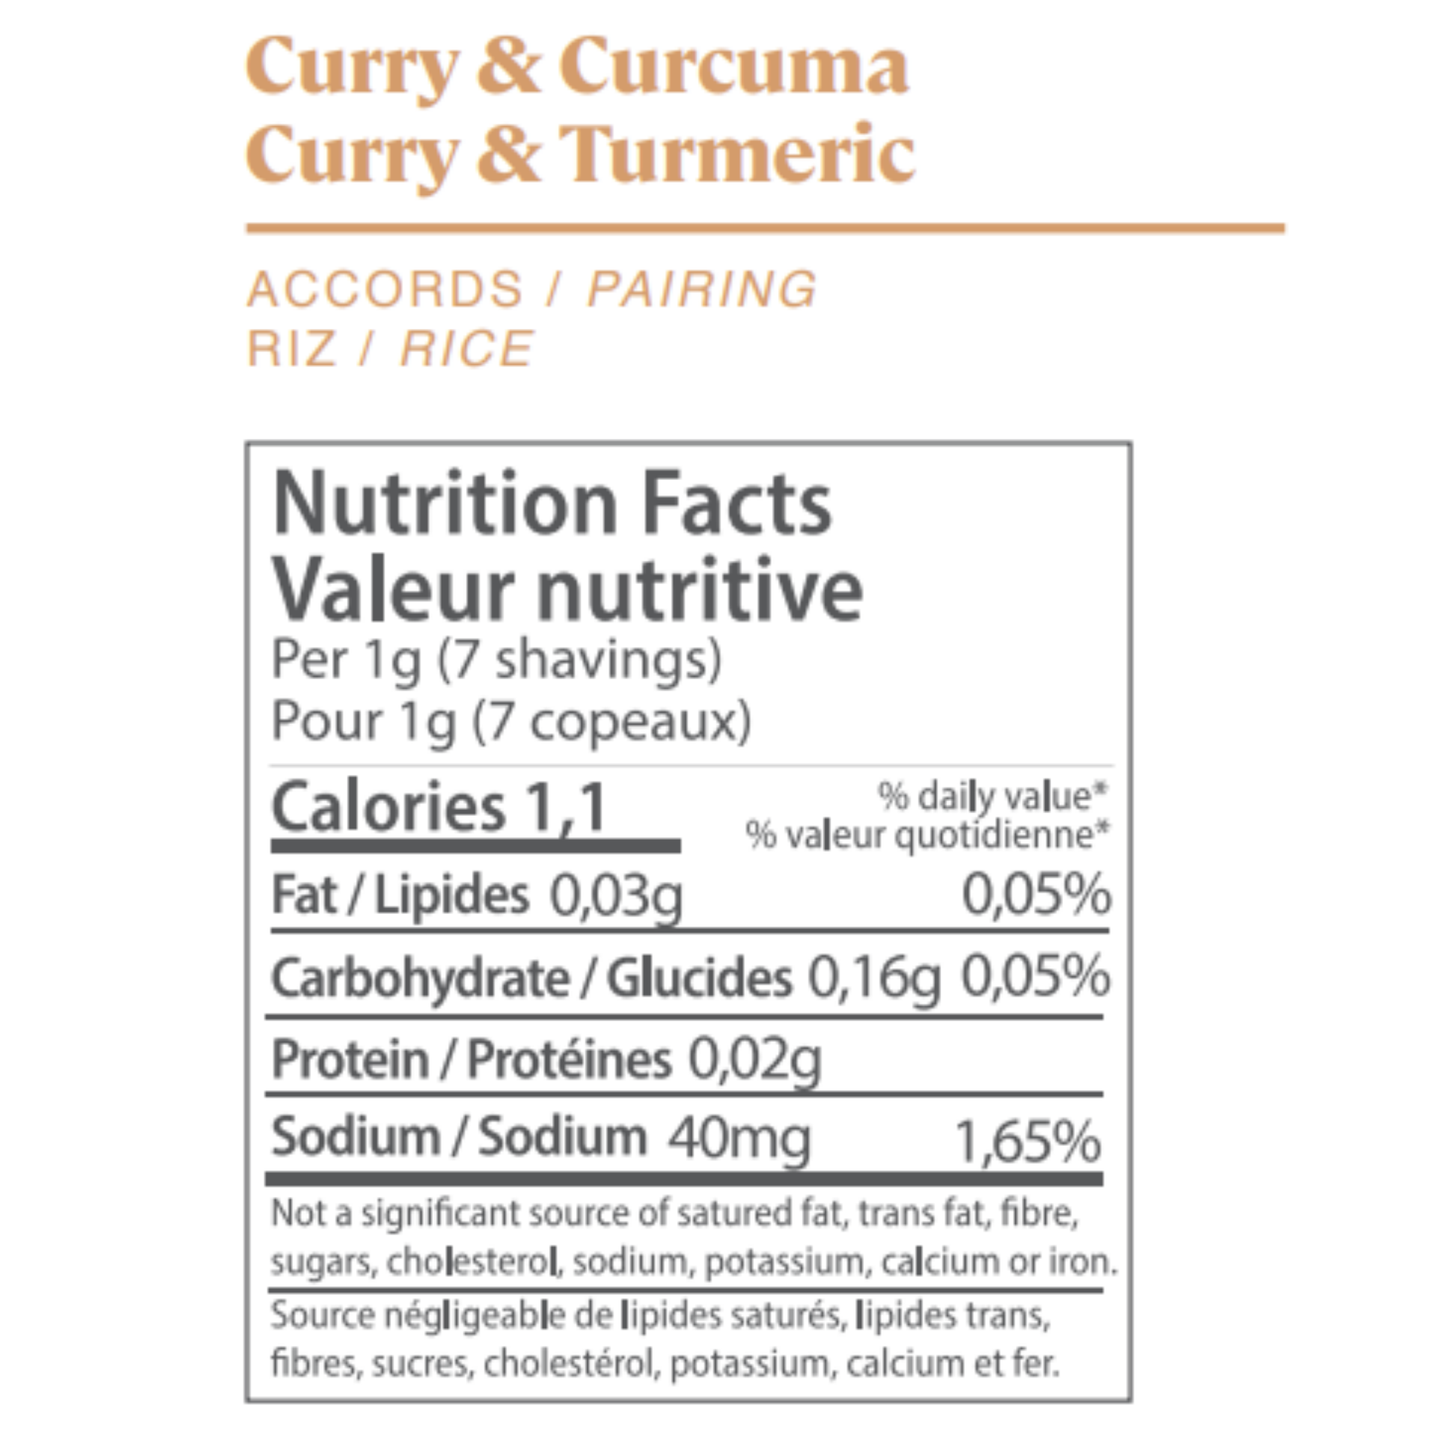 Curry & Turmeric - Single Box (1 Food Crayon + 1 Sharpener)